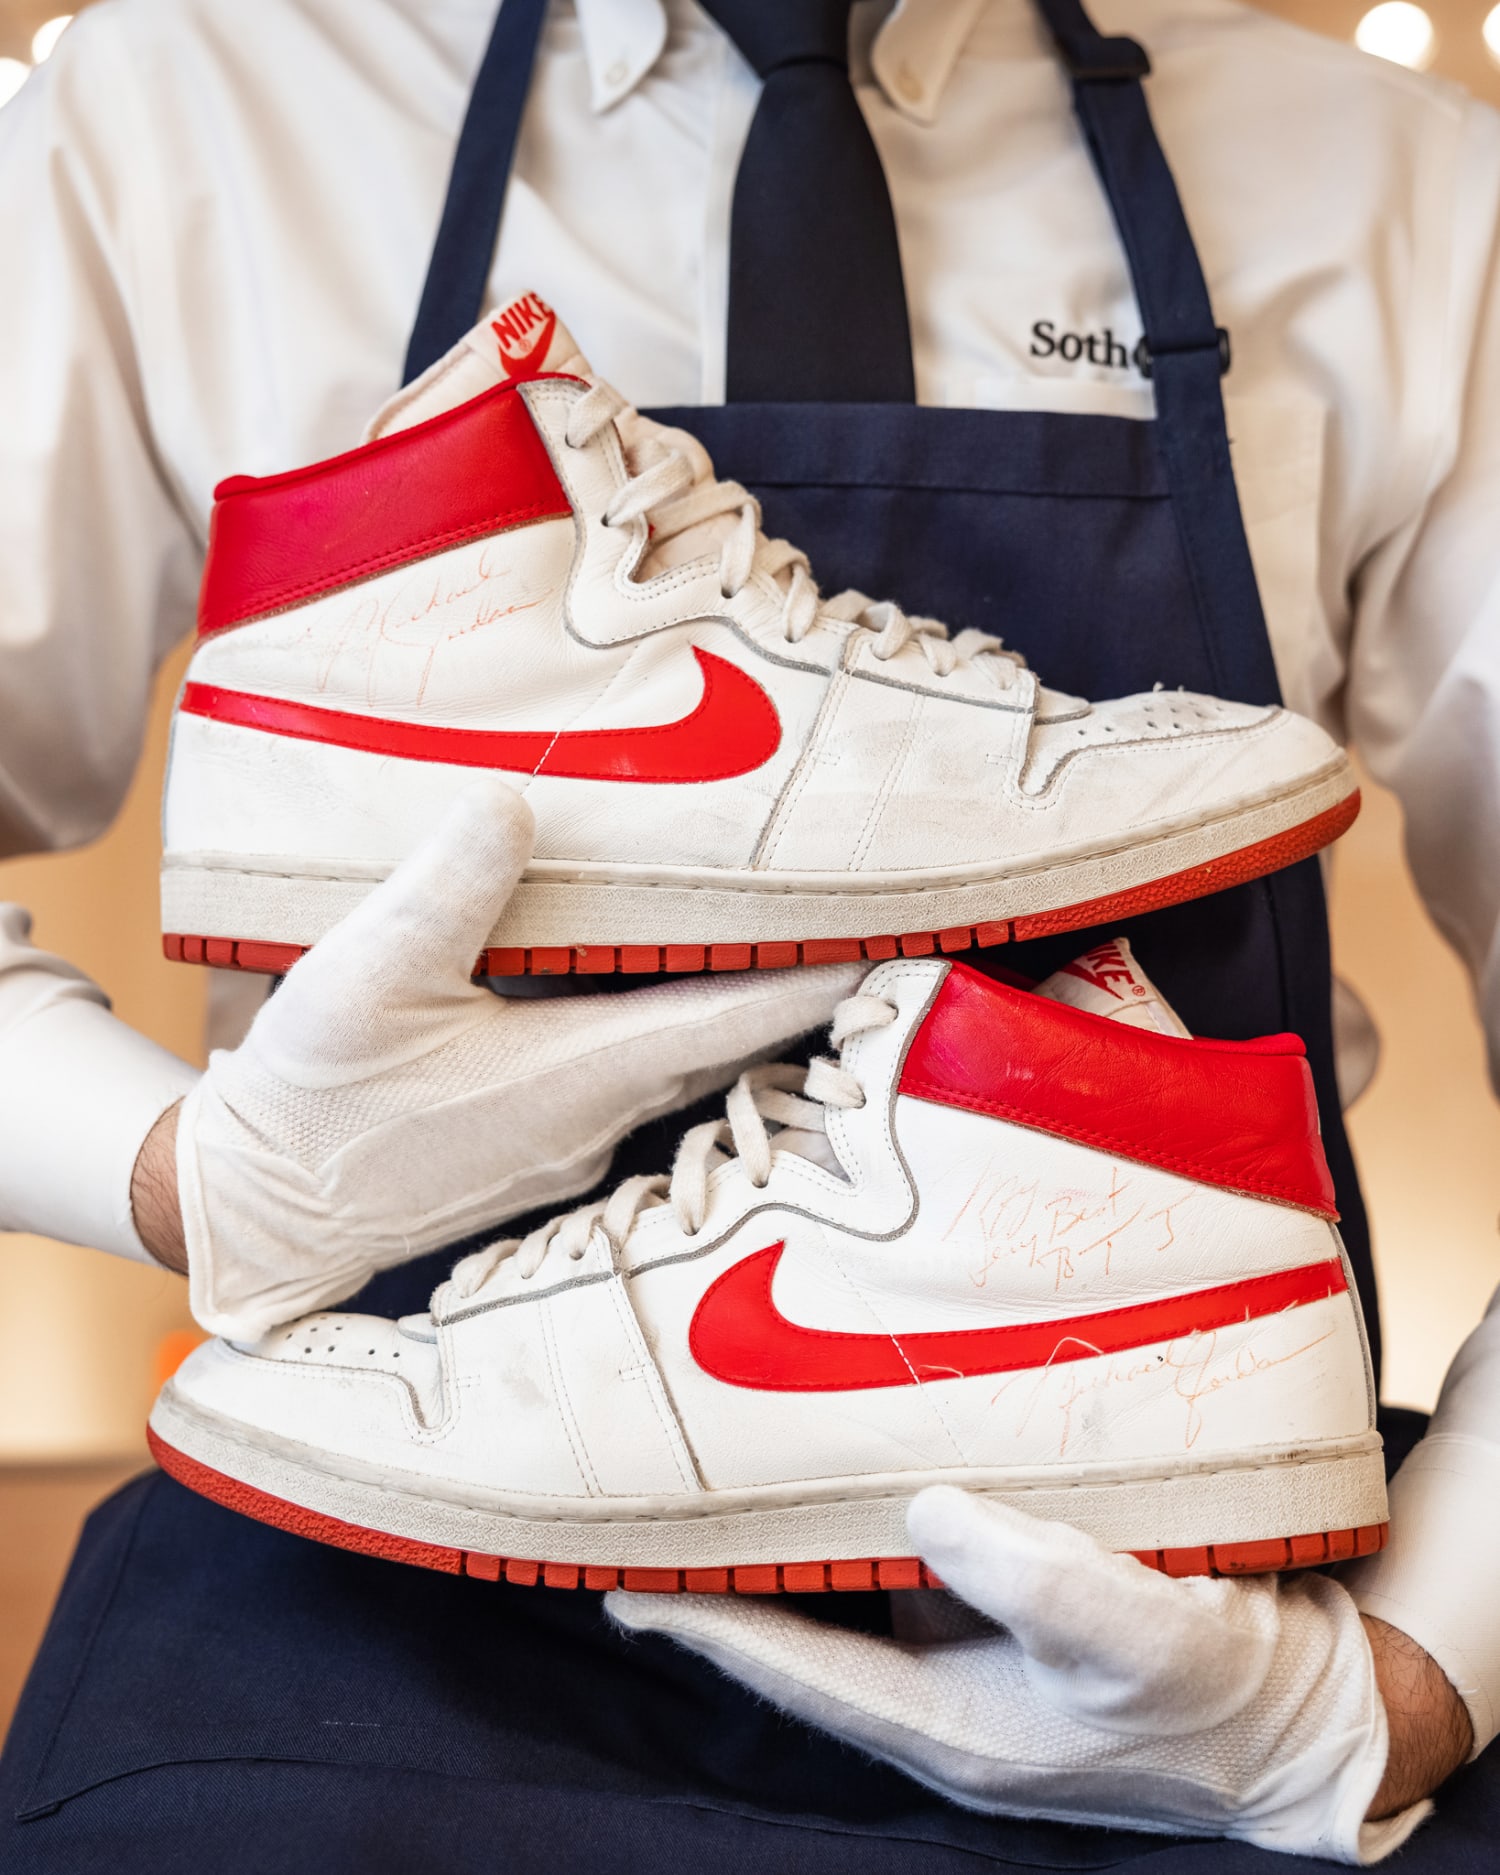 Min schoorsteen Begroeten Michael Jordan's 1984 Nike Air Ships sell for record $1.5M at Sotheby's